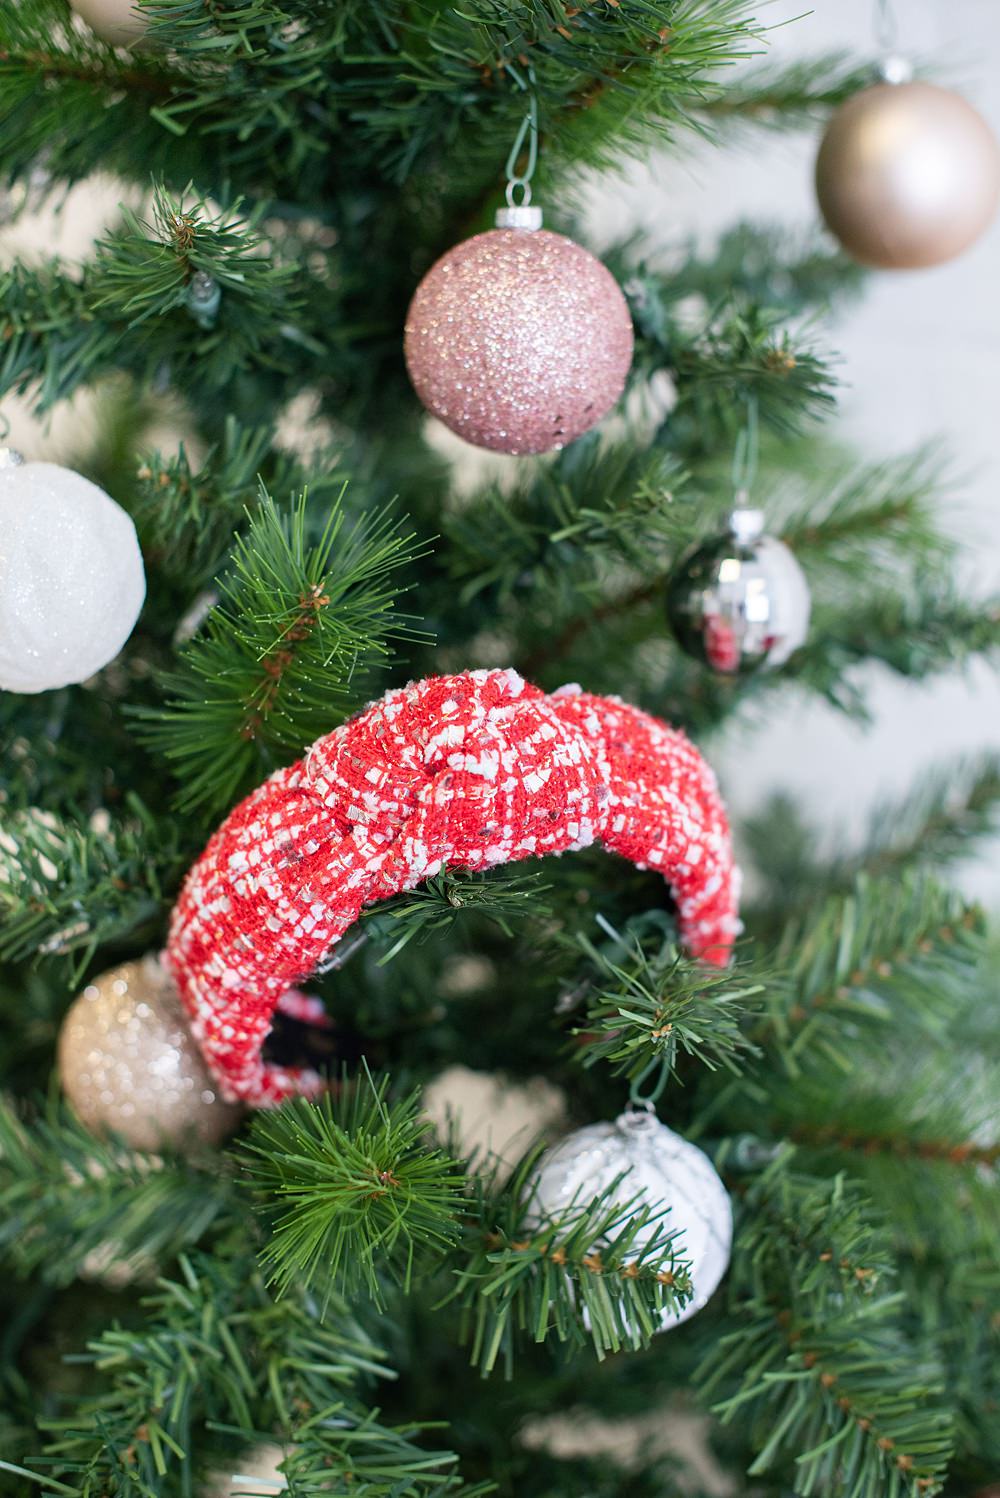 A red headband on the Christmas tree